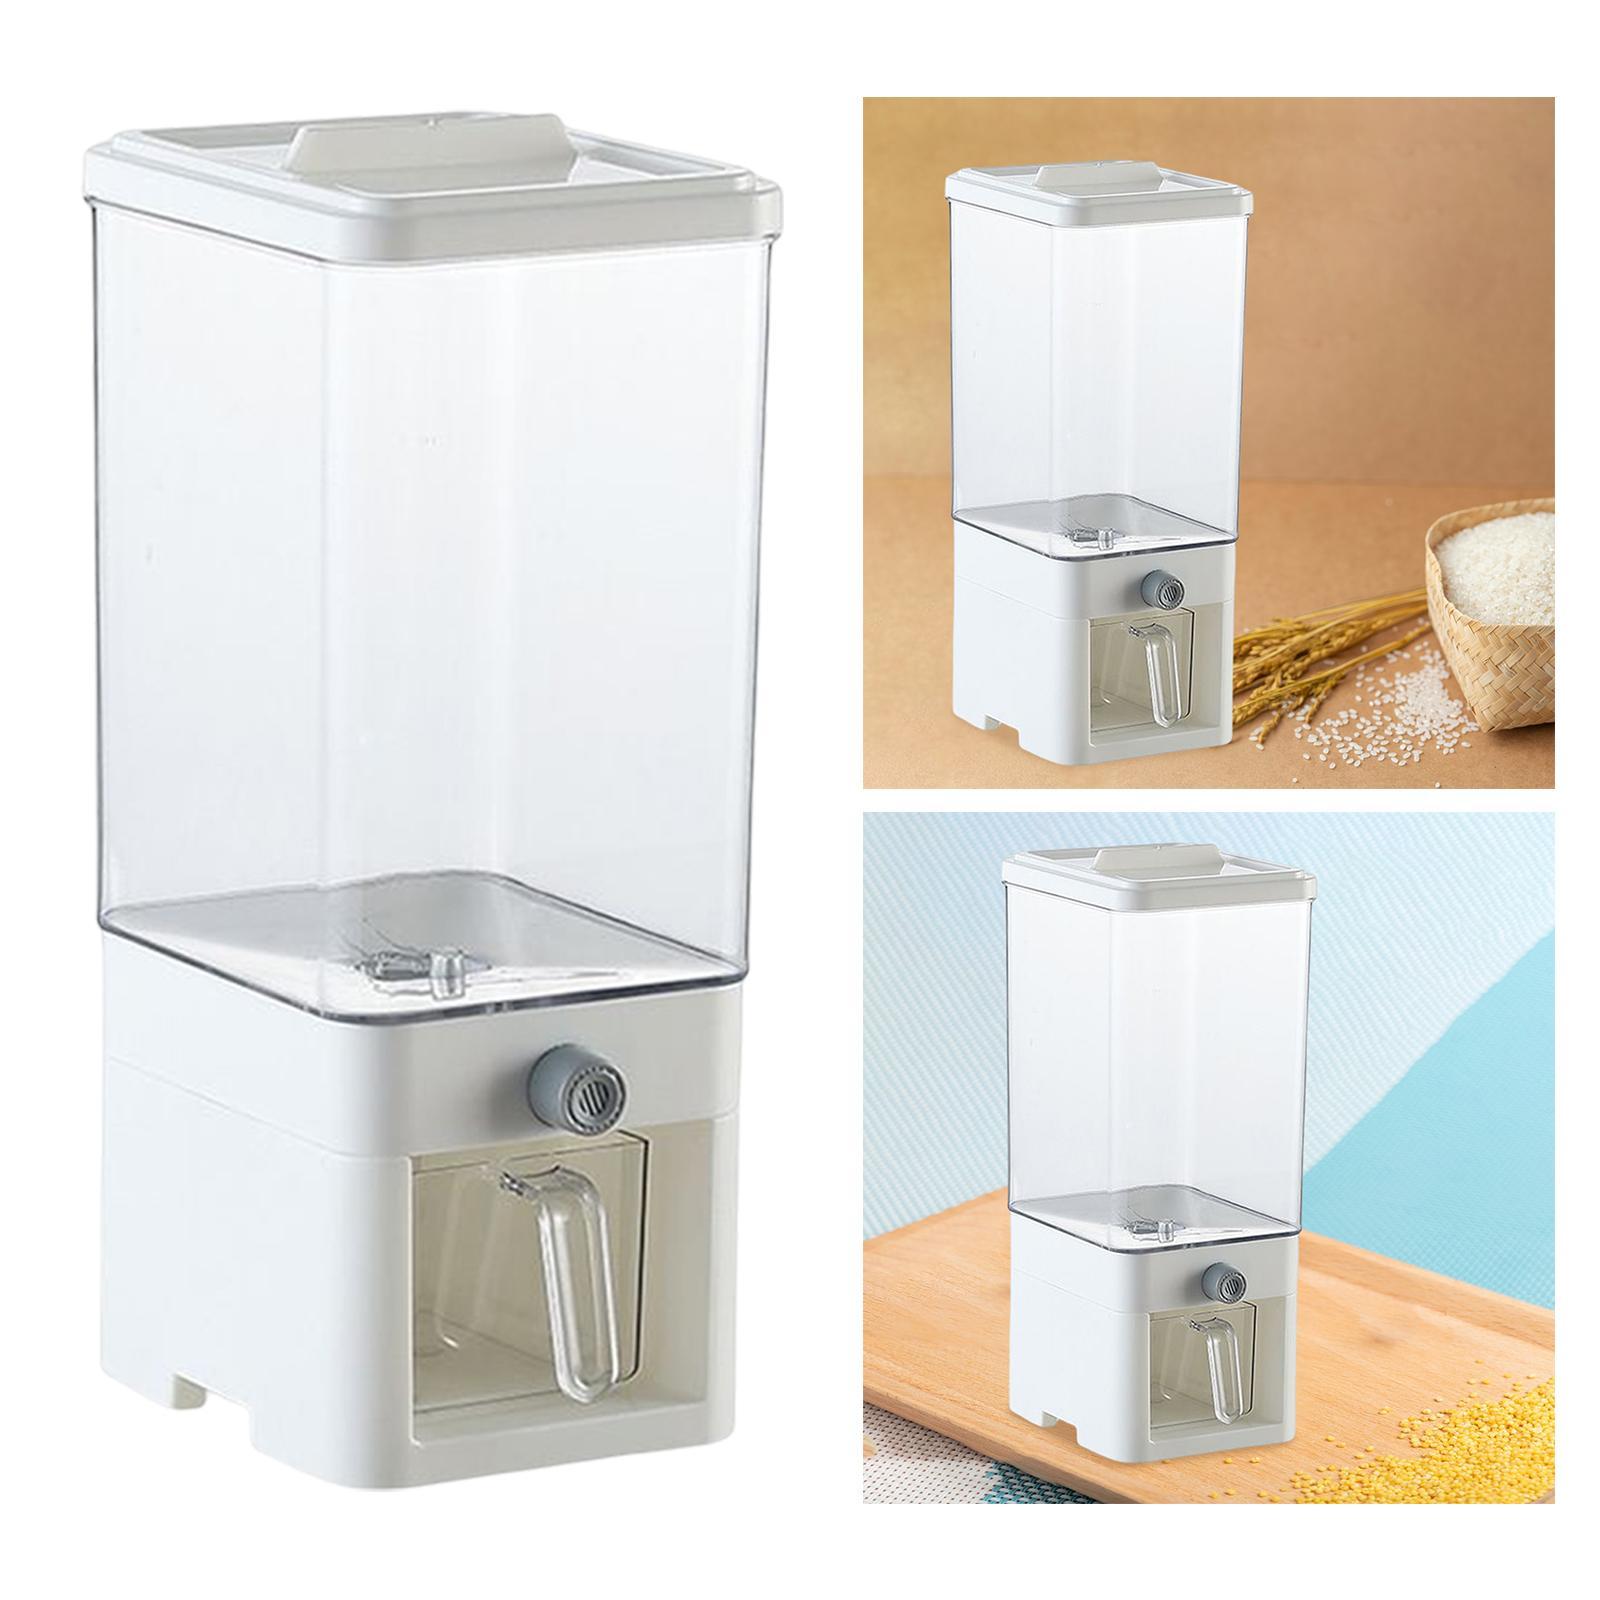 Rice Dispenser Food Dispenser Cereal Dispenser Bucket for Countertop Pantry